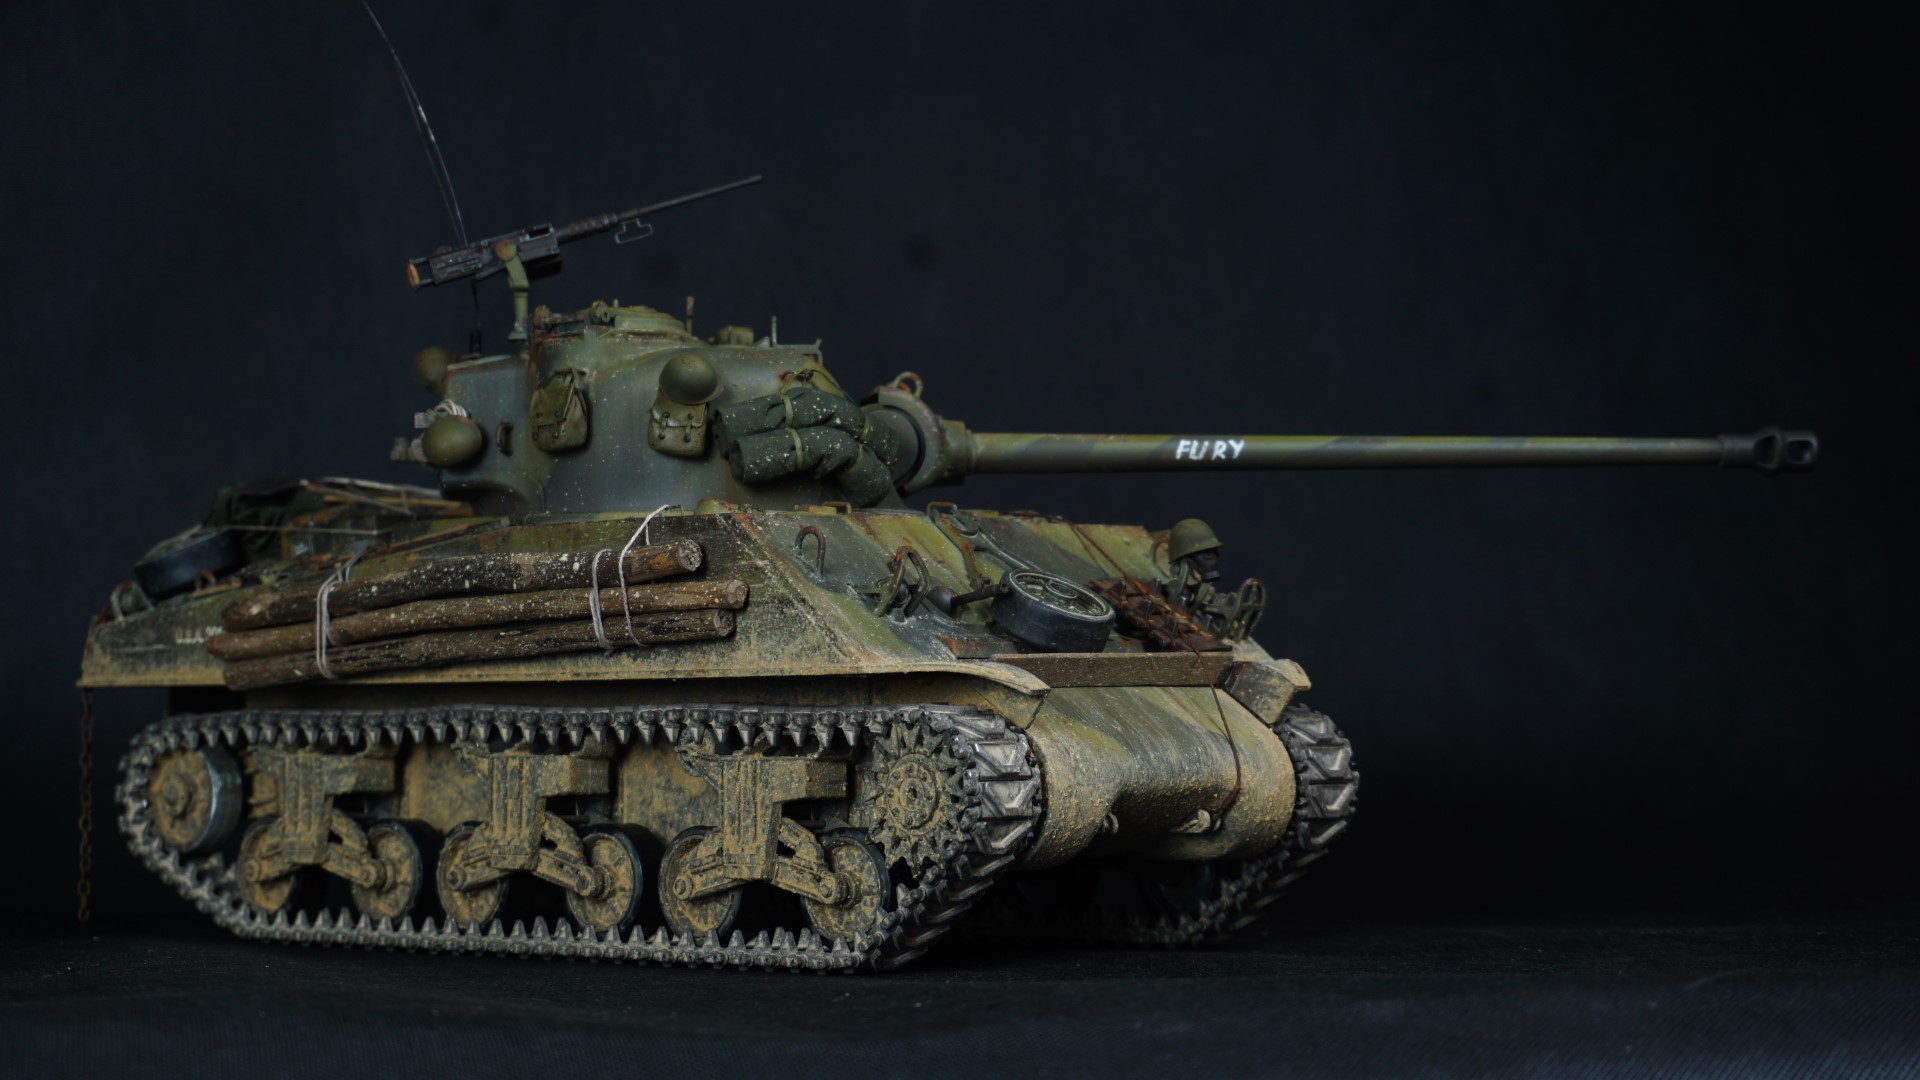 Sherman Fury World War II U.S.A. MEDIUM TANK Customized Paint, Build and Weathering Based on HENG-LONG HL-3898 Pro M4A3 Sherman Metal RC Tank